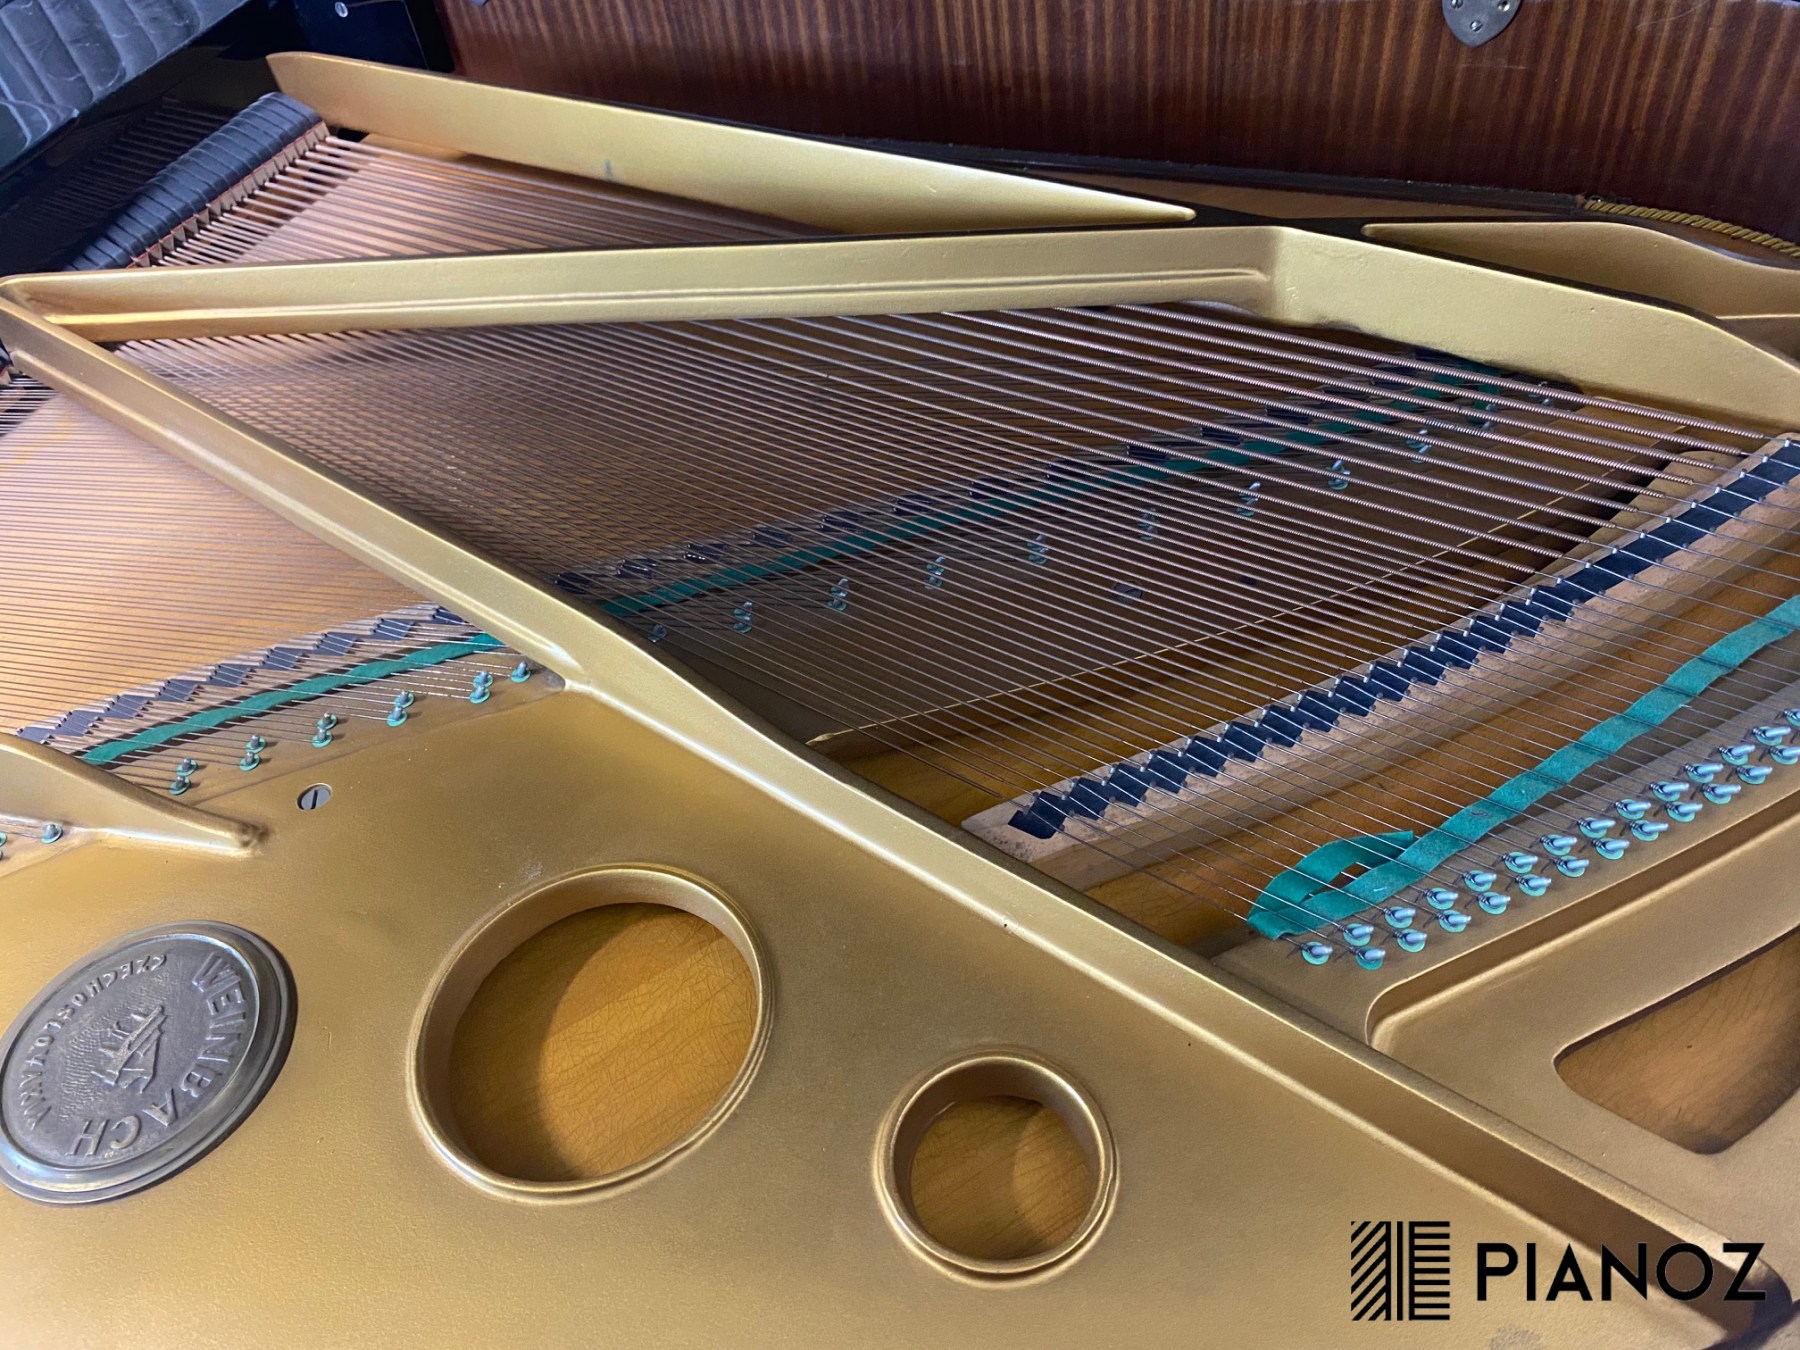 Weinbach 198 Grand Piano piano for sale in UK